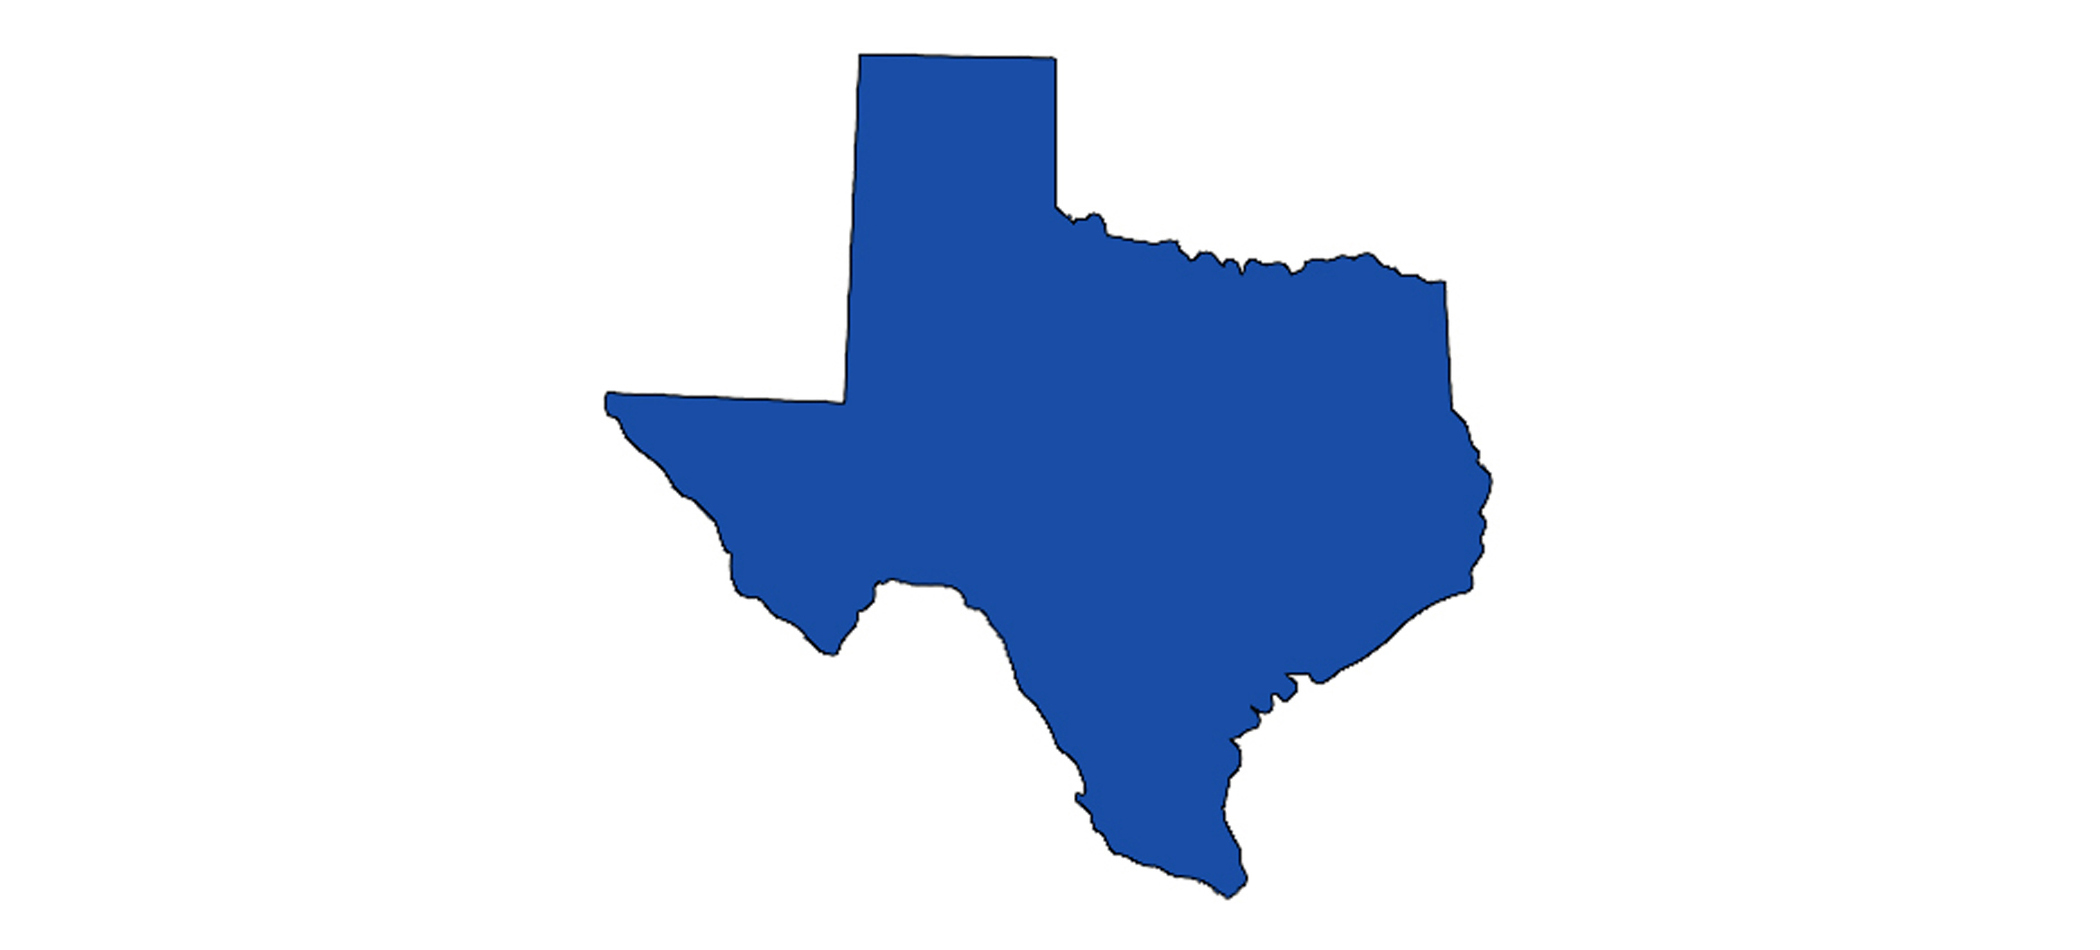 Make Texas Blue!